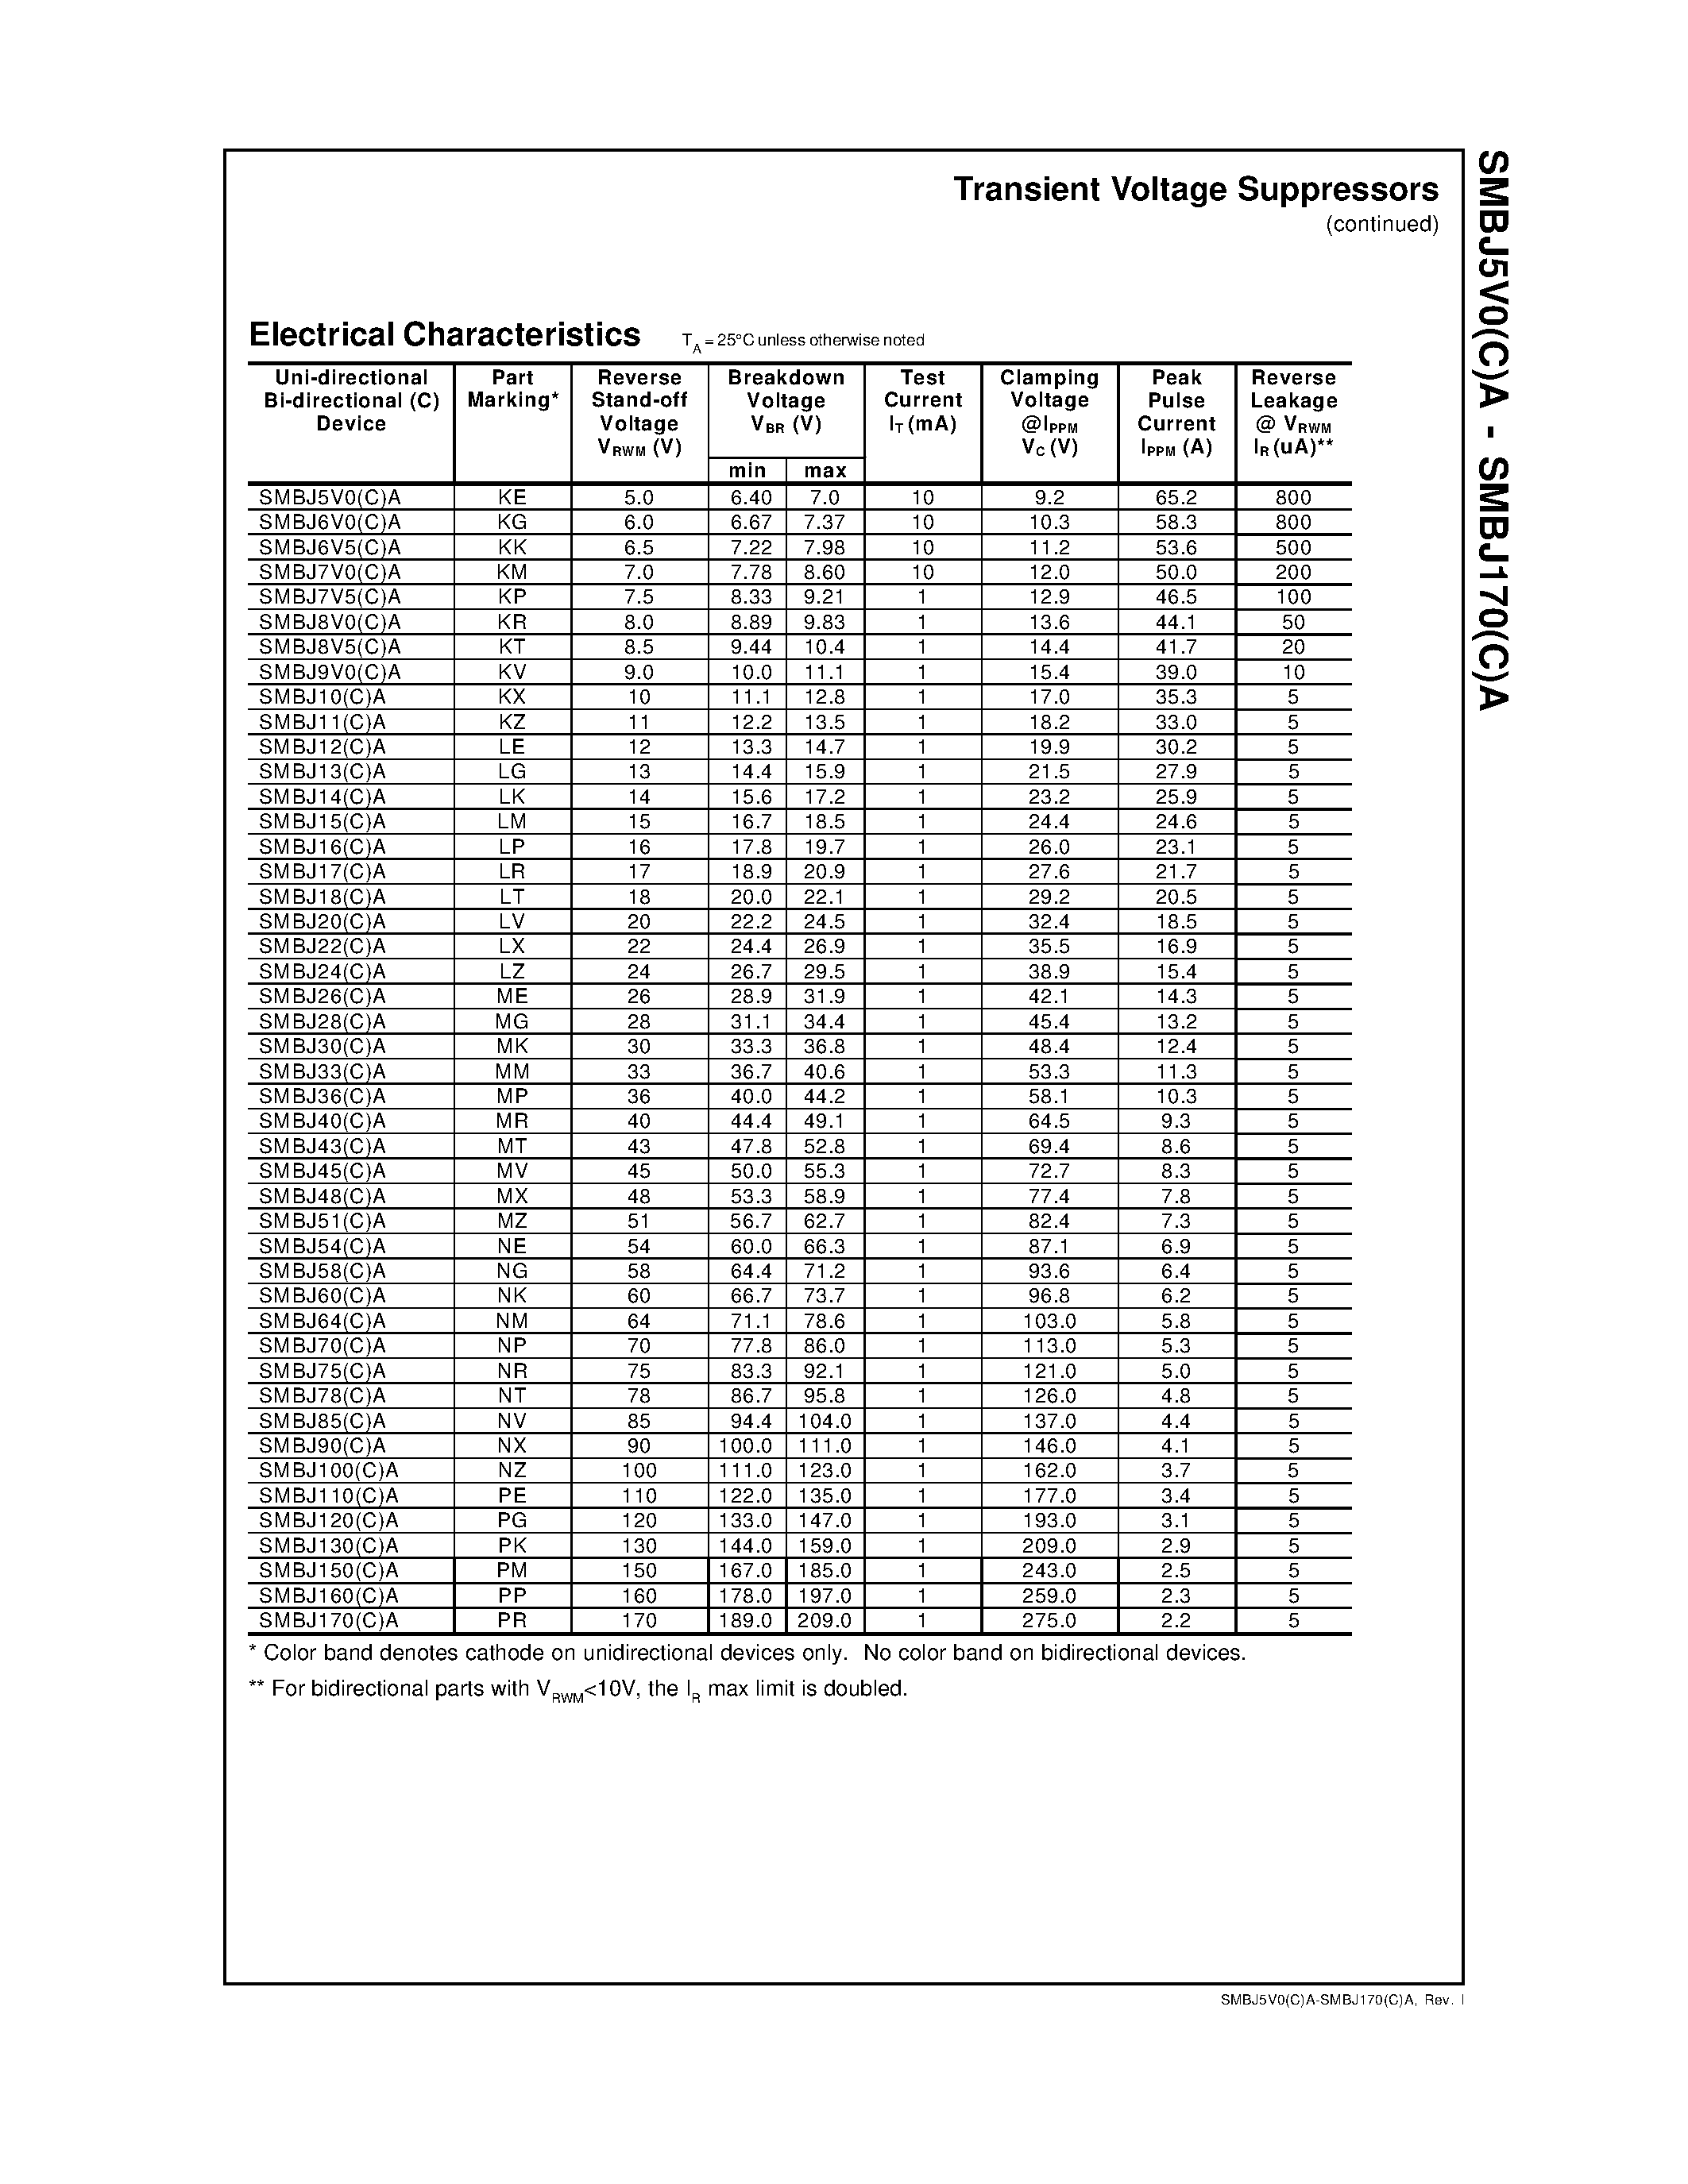 Datasheet SMBJ28A - Transient Voltage Suppressors SMBJ5V0(C)A - SMBJ170(C)A page 2